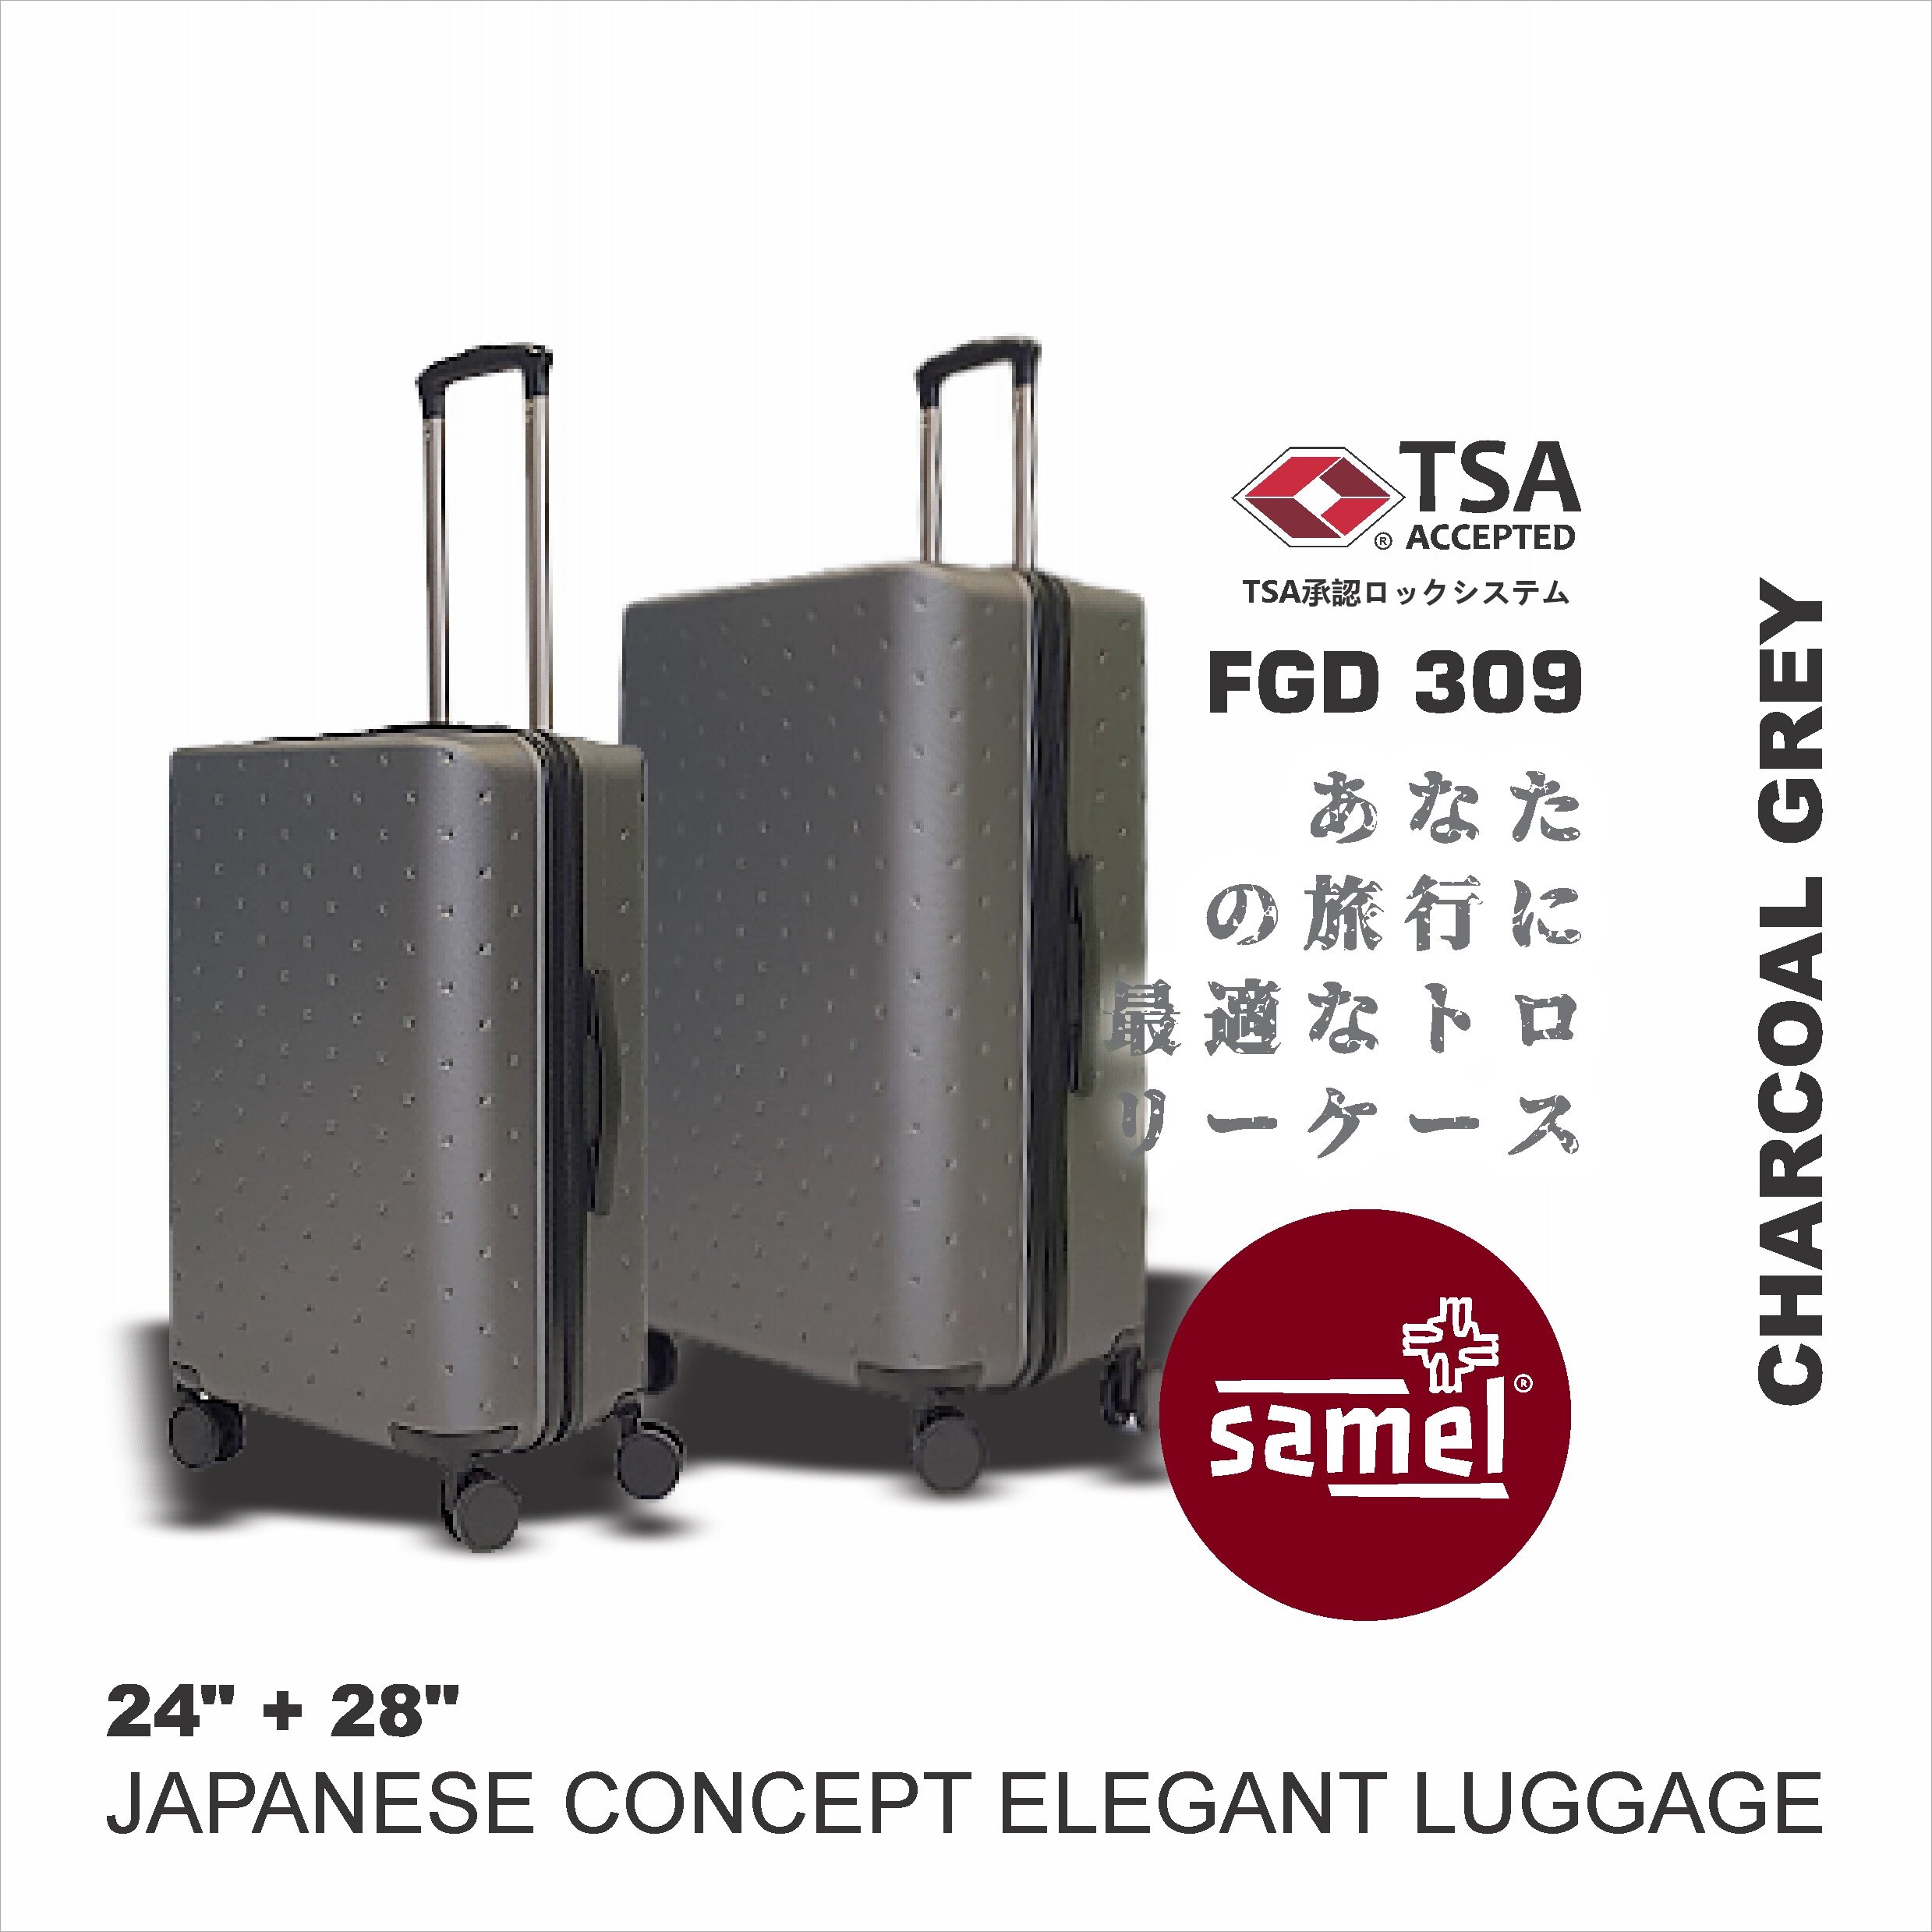 SAMEL 24"+28" FGD 309 JAPANESE CONCEPT ELEGANT LUGGAGE 2 IN 1 SET